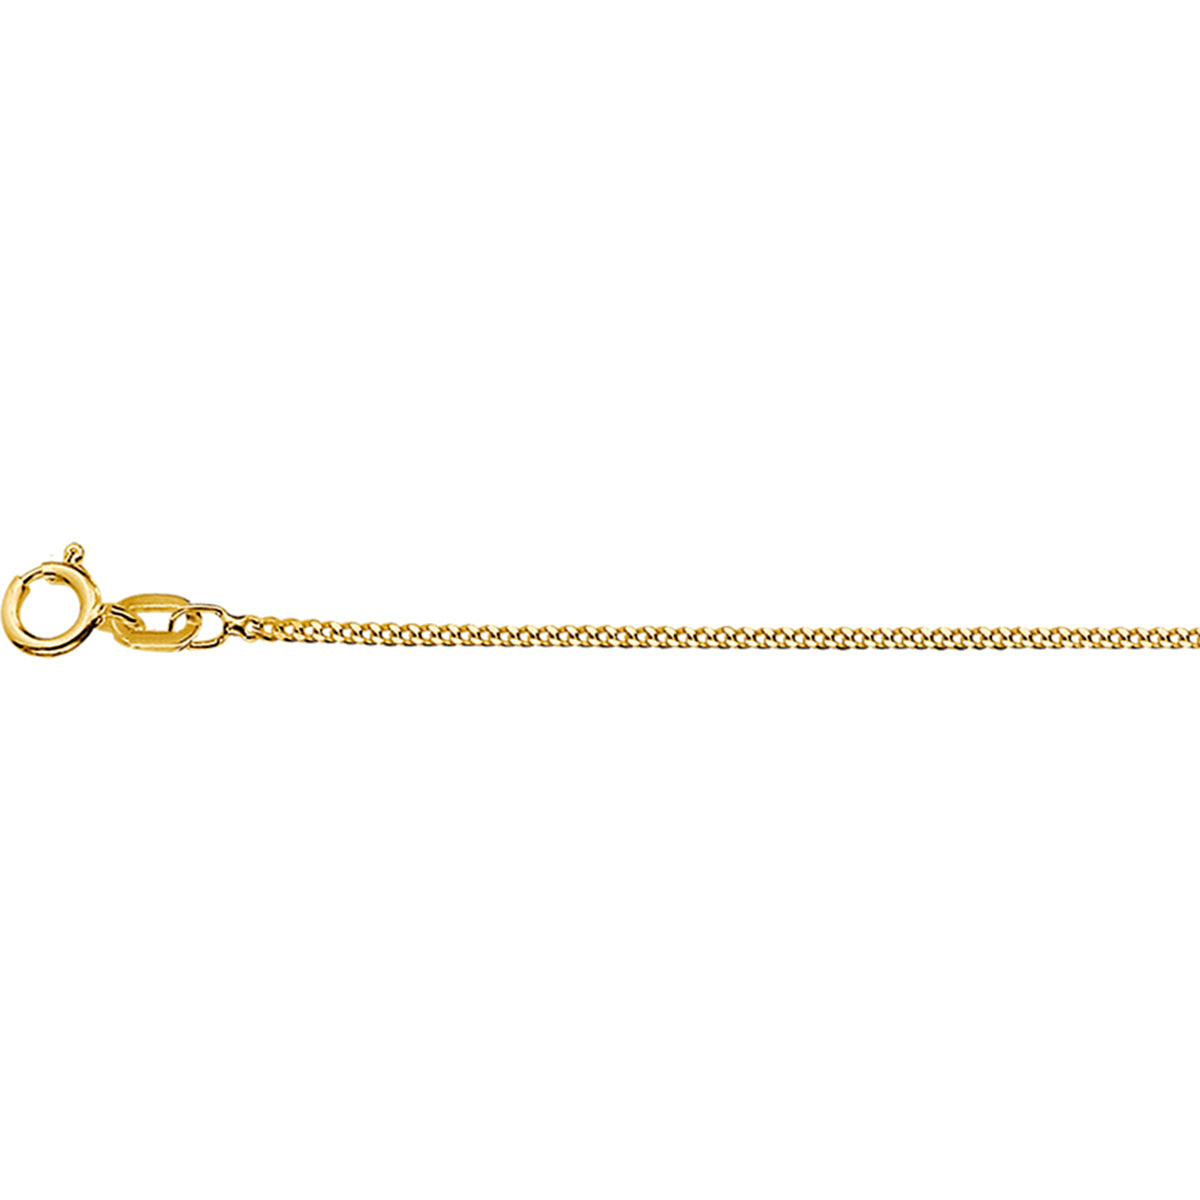 Necklace 14k Gold - 60 cm